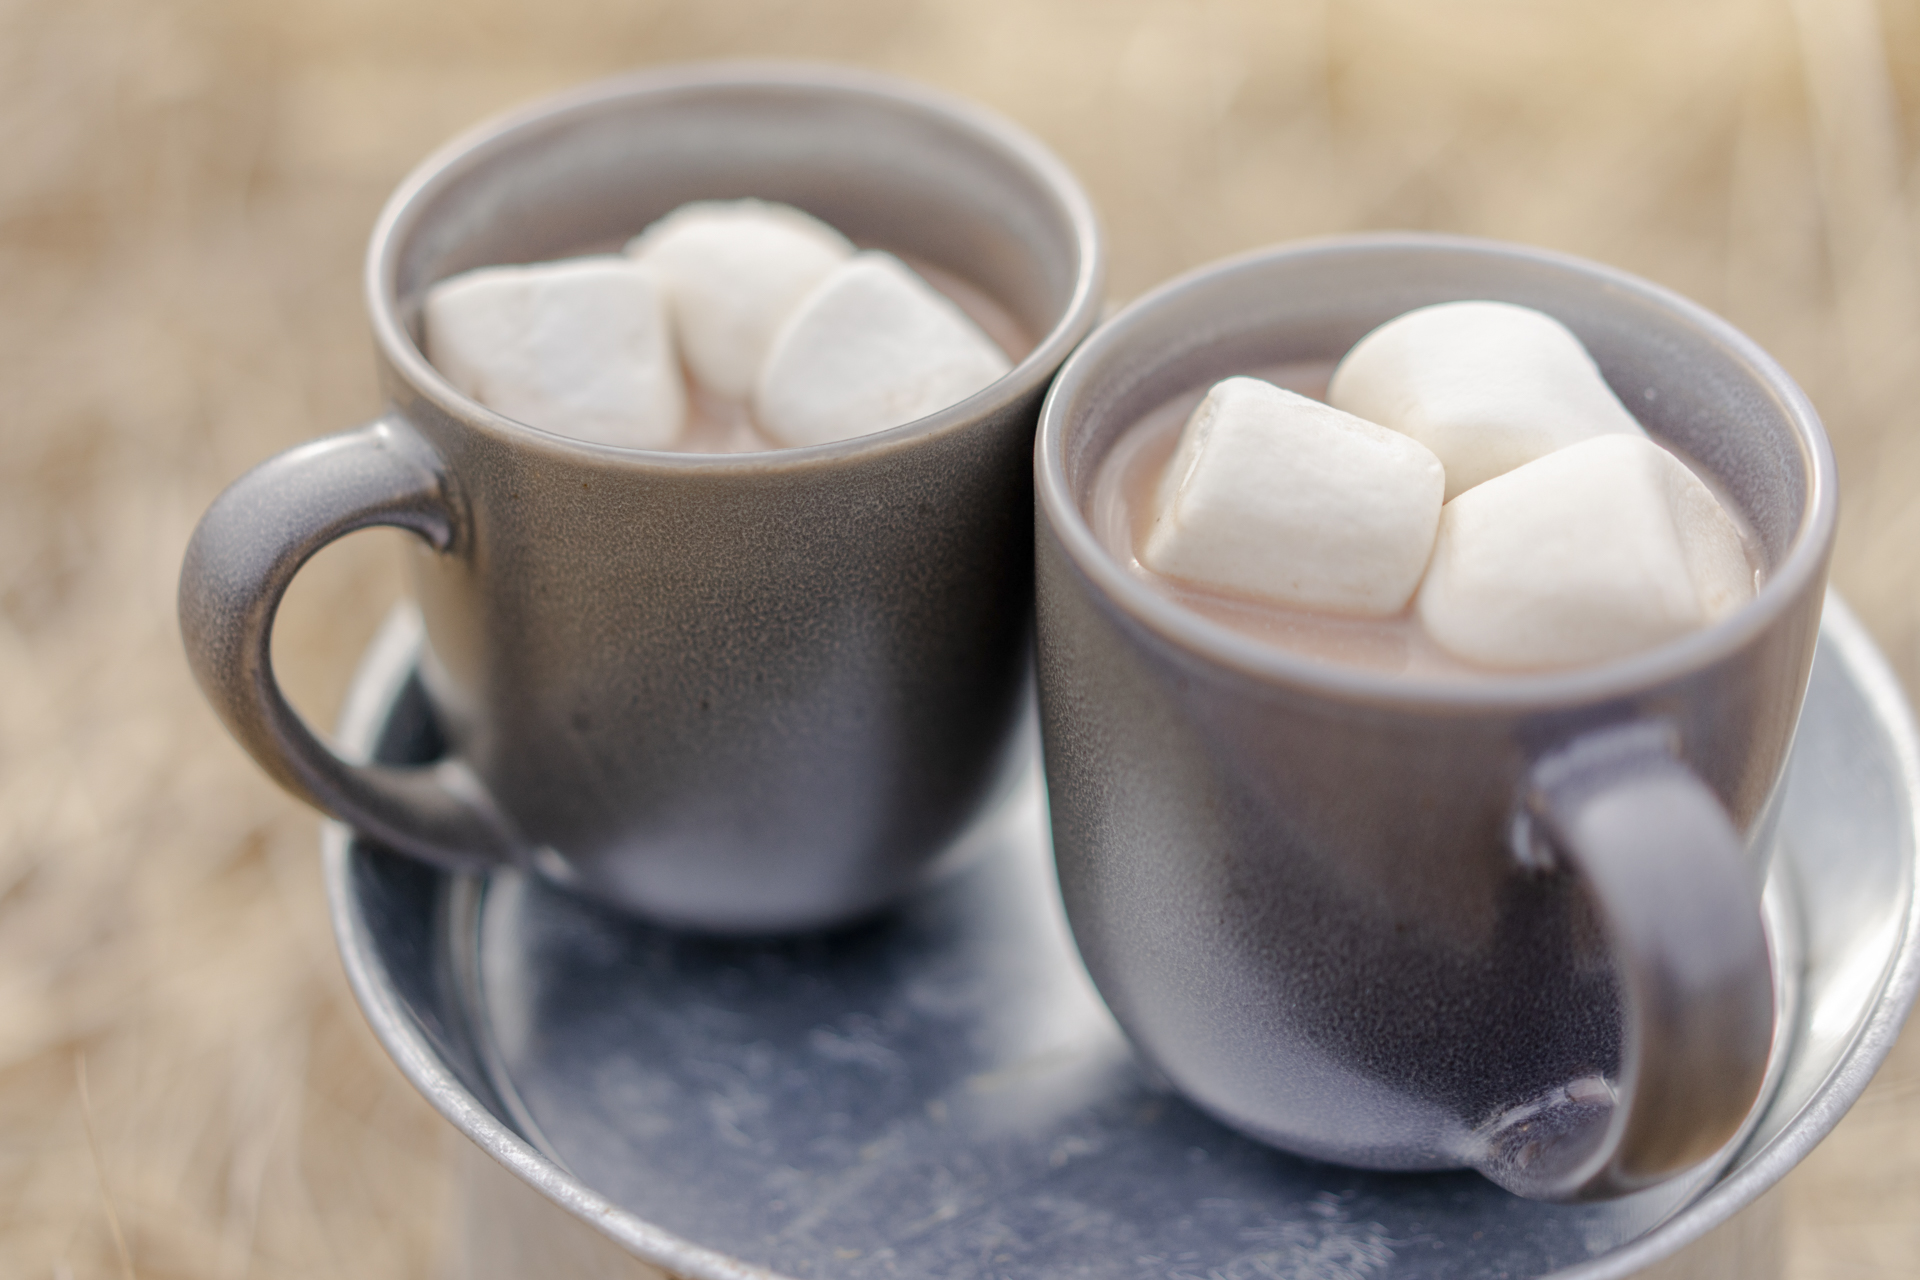 Coffee Warmer and Mug Set for Hot Chocolate Portable Electric Beverage  Warmer